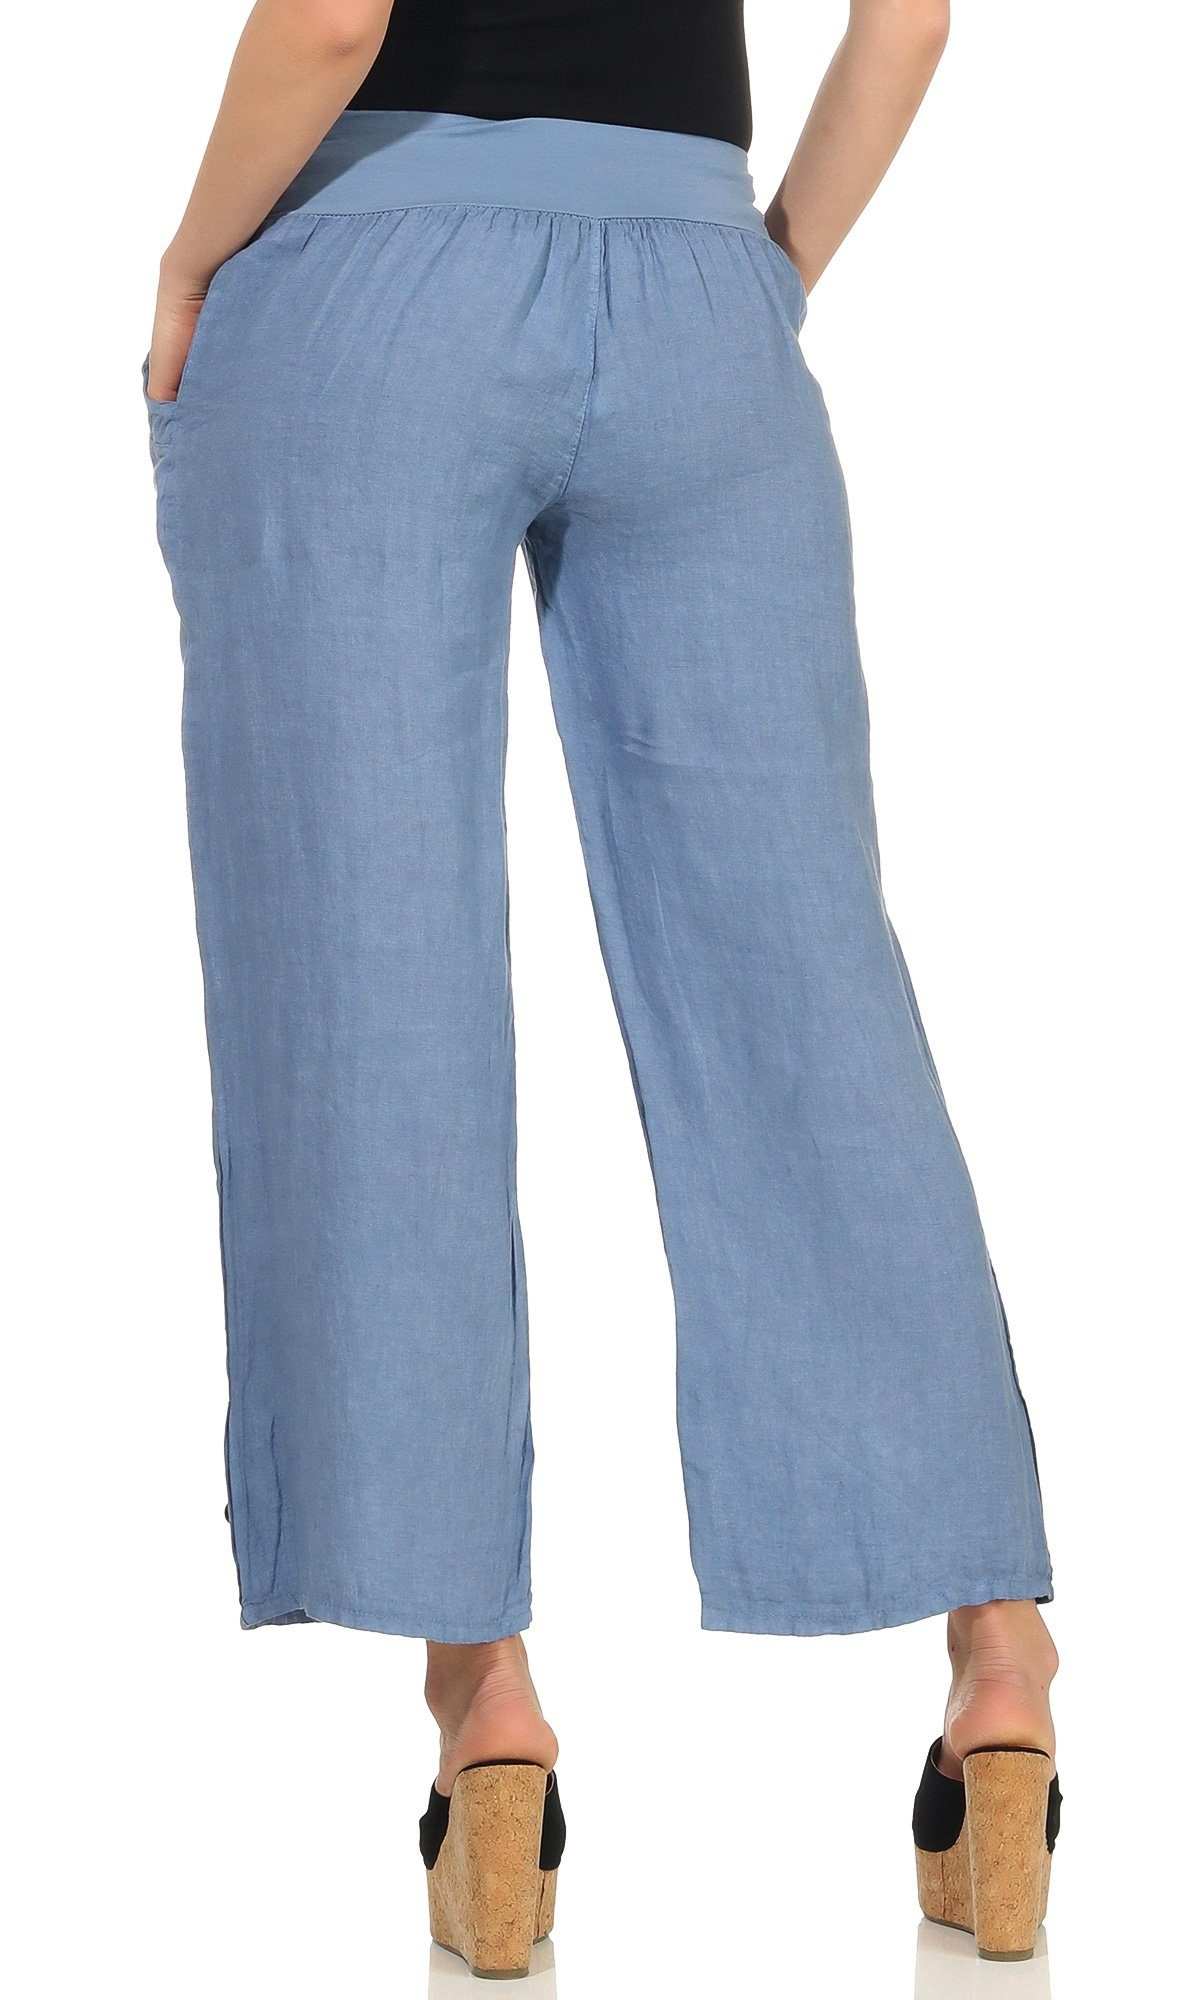 Mississhop Freizeithose 100 Leinen Hose Leinenhose Jeansblau 7/8 % Lange M.319 Leinenhose